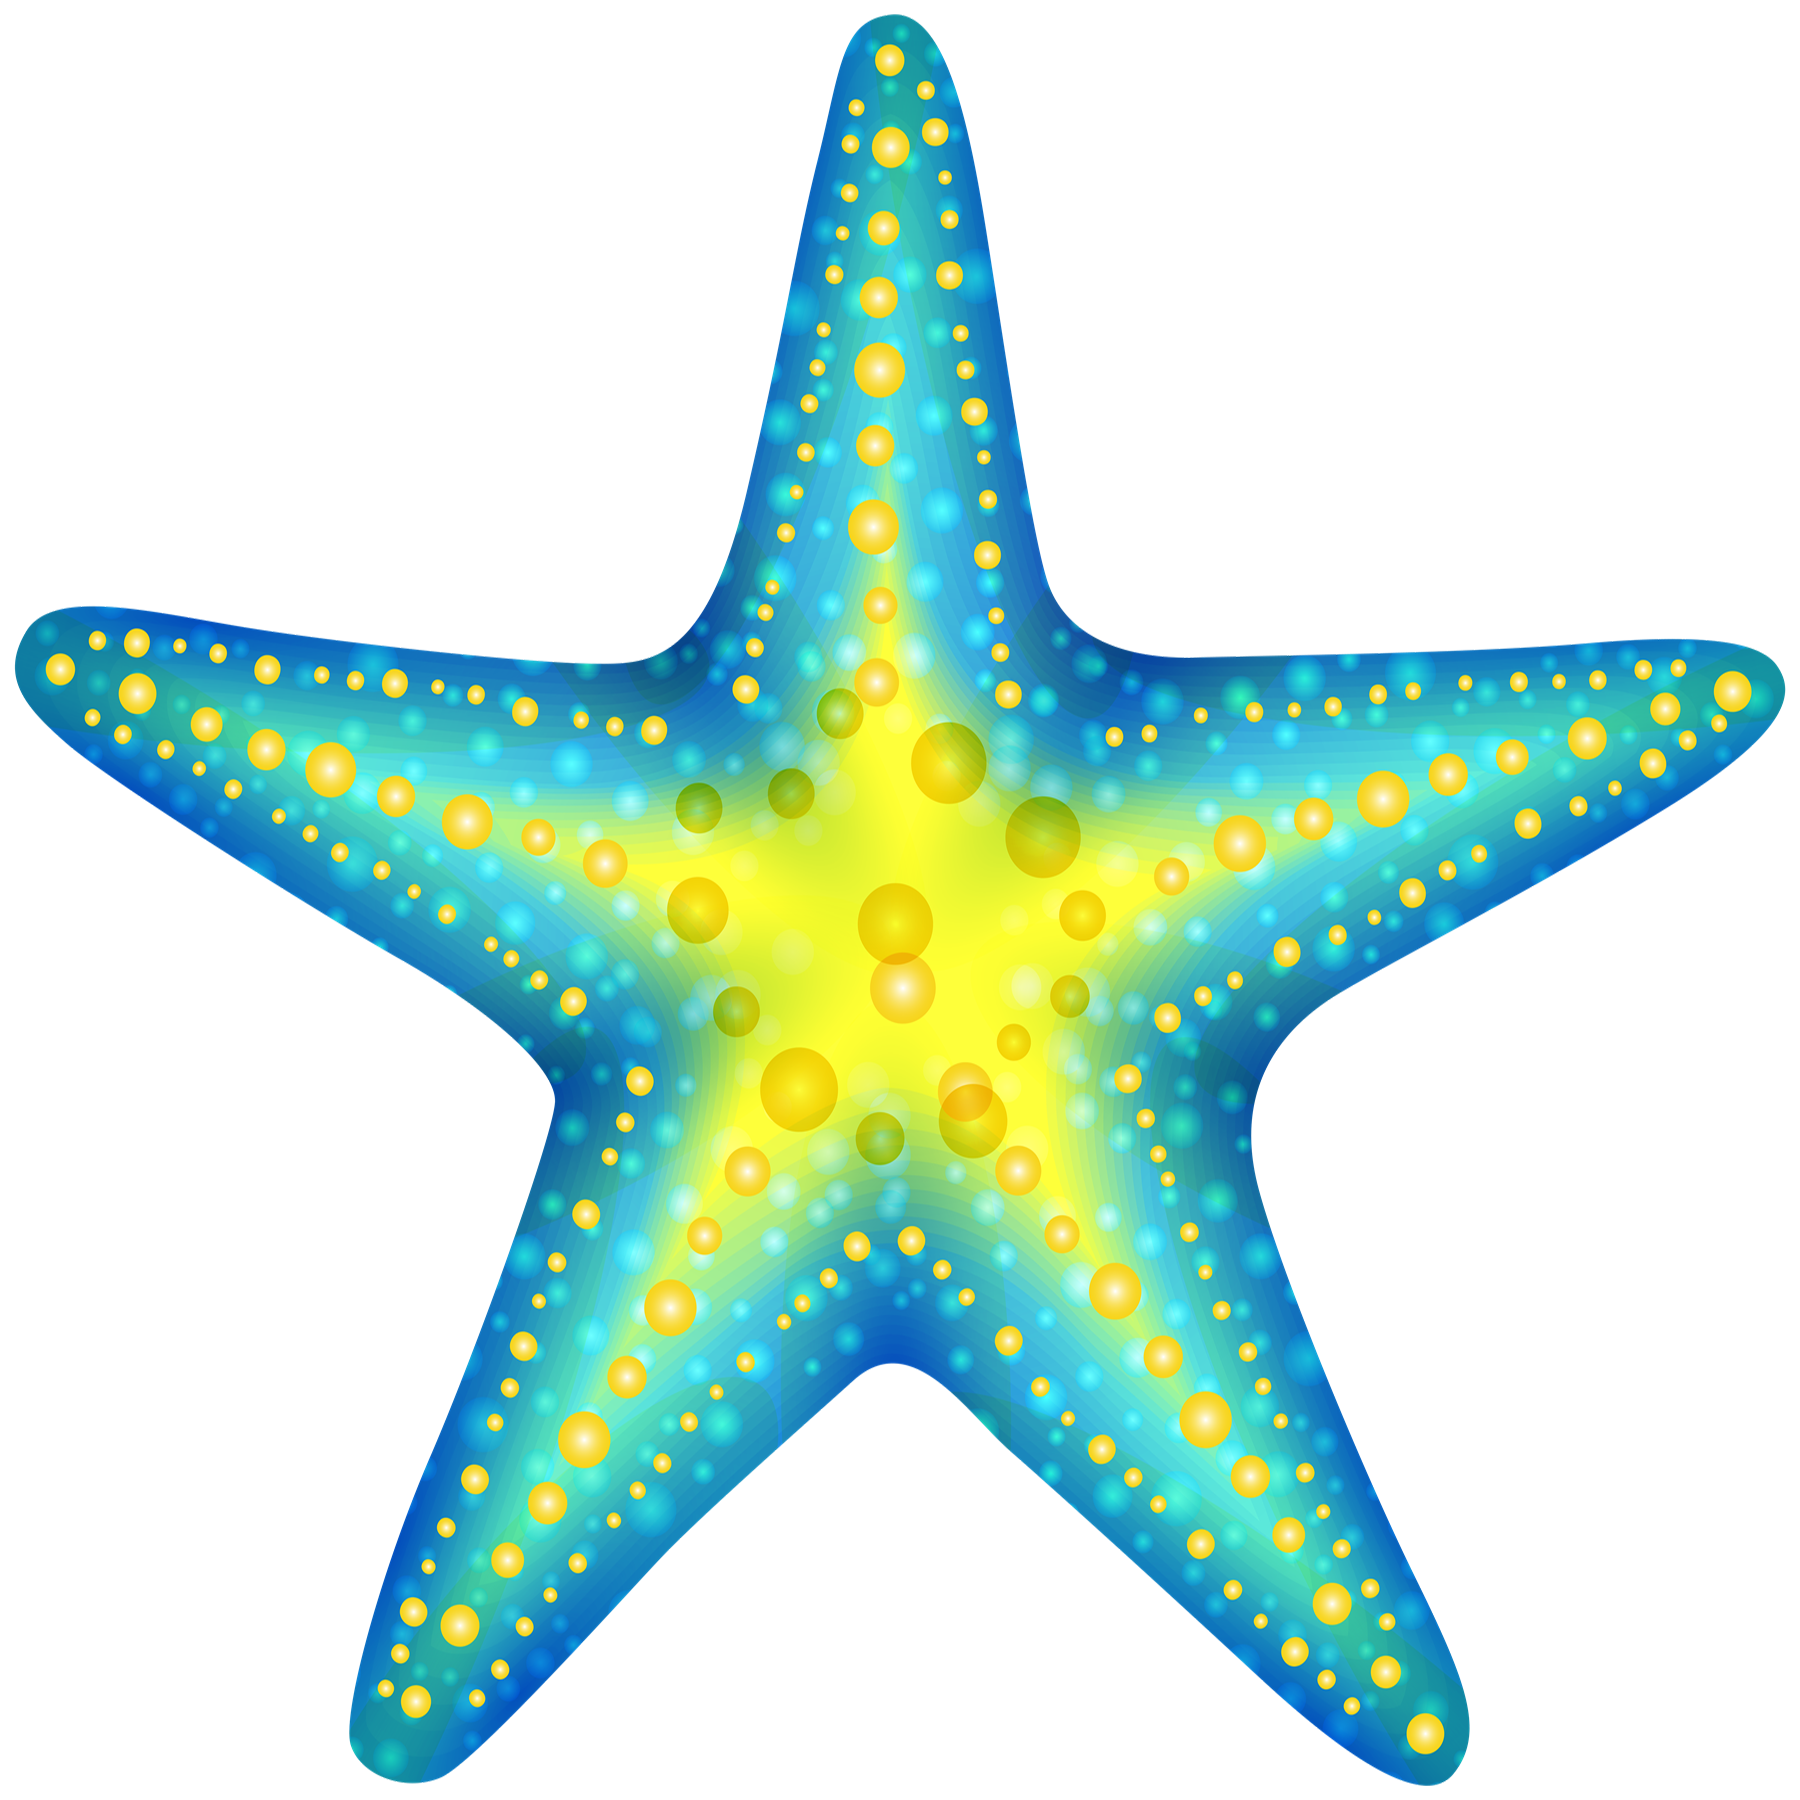 Star Fish Transparent Image